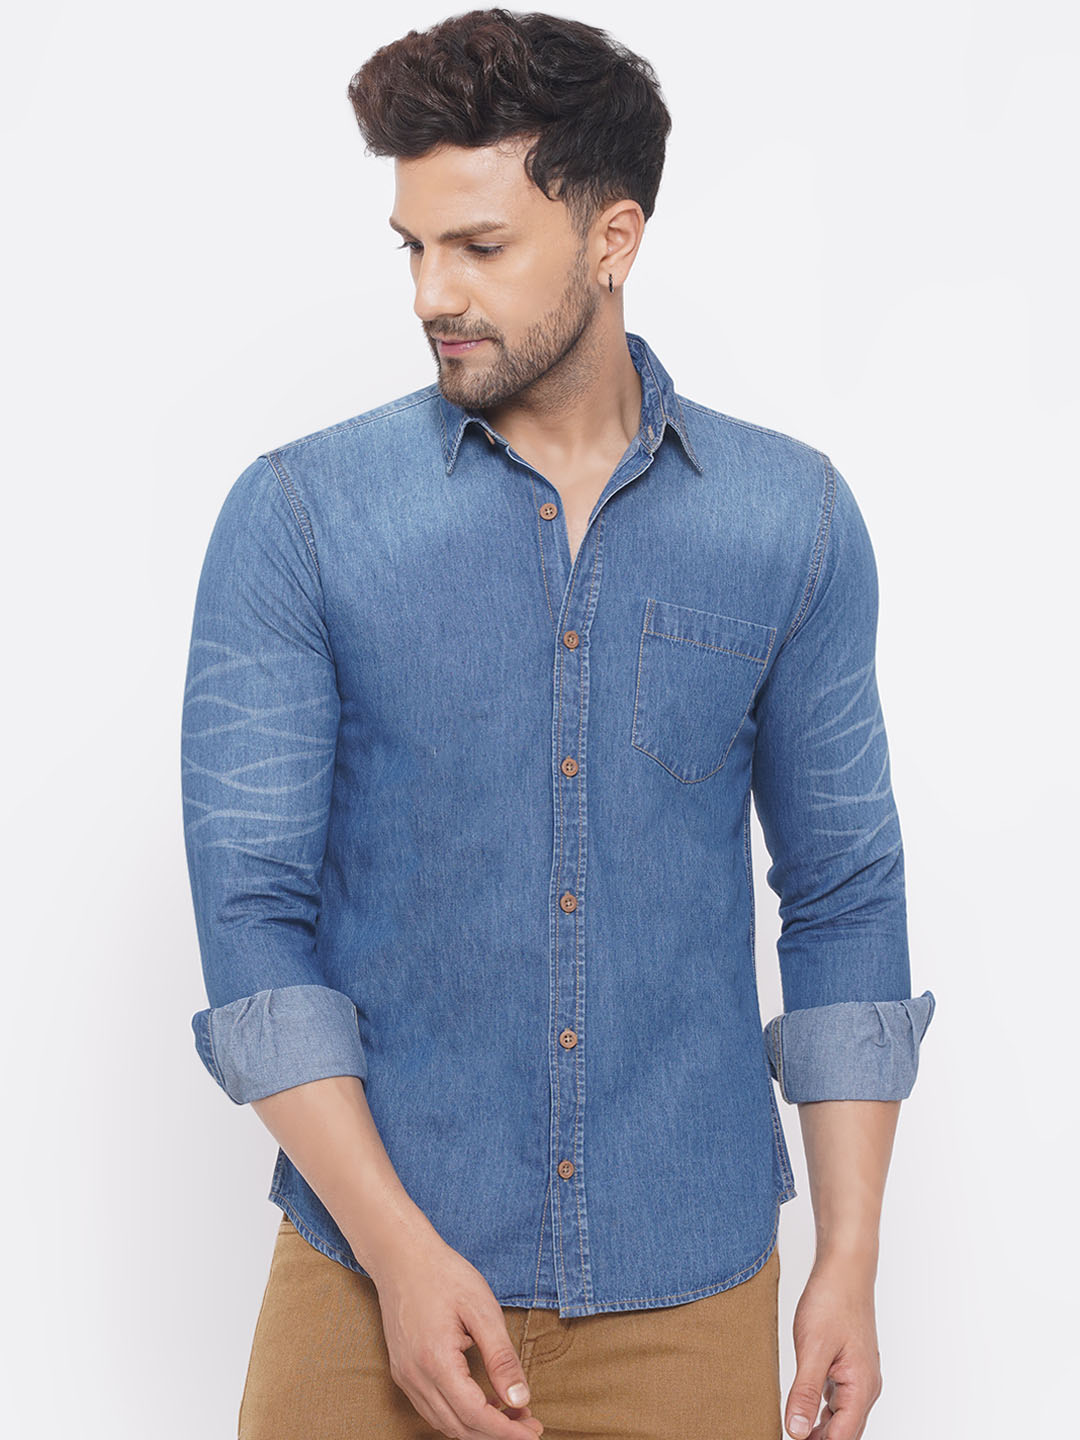 Buy Royal Blue Denim Shirt for Men Online in India -Beyoung-chantamquoc.vn